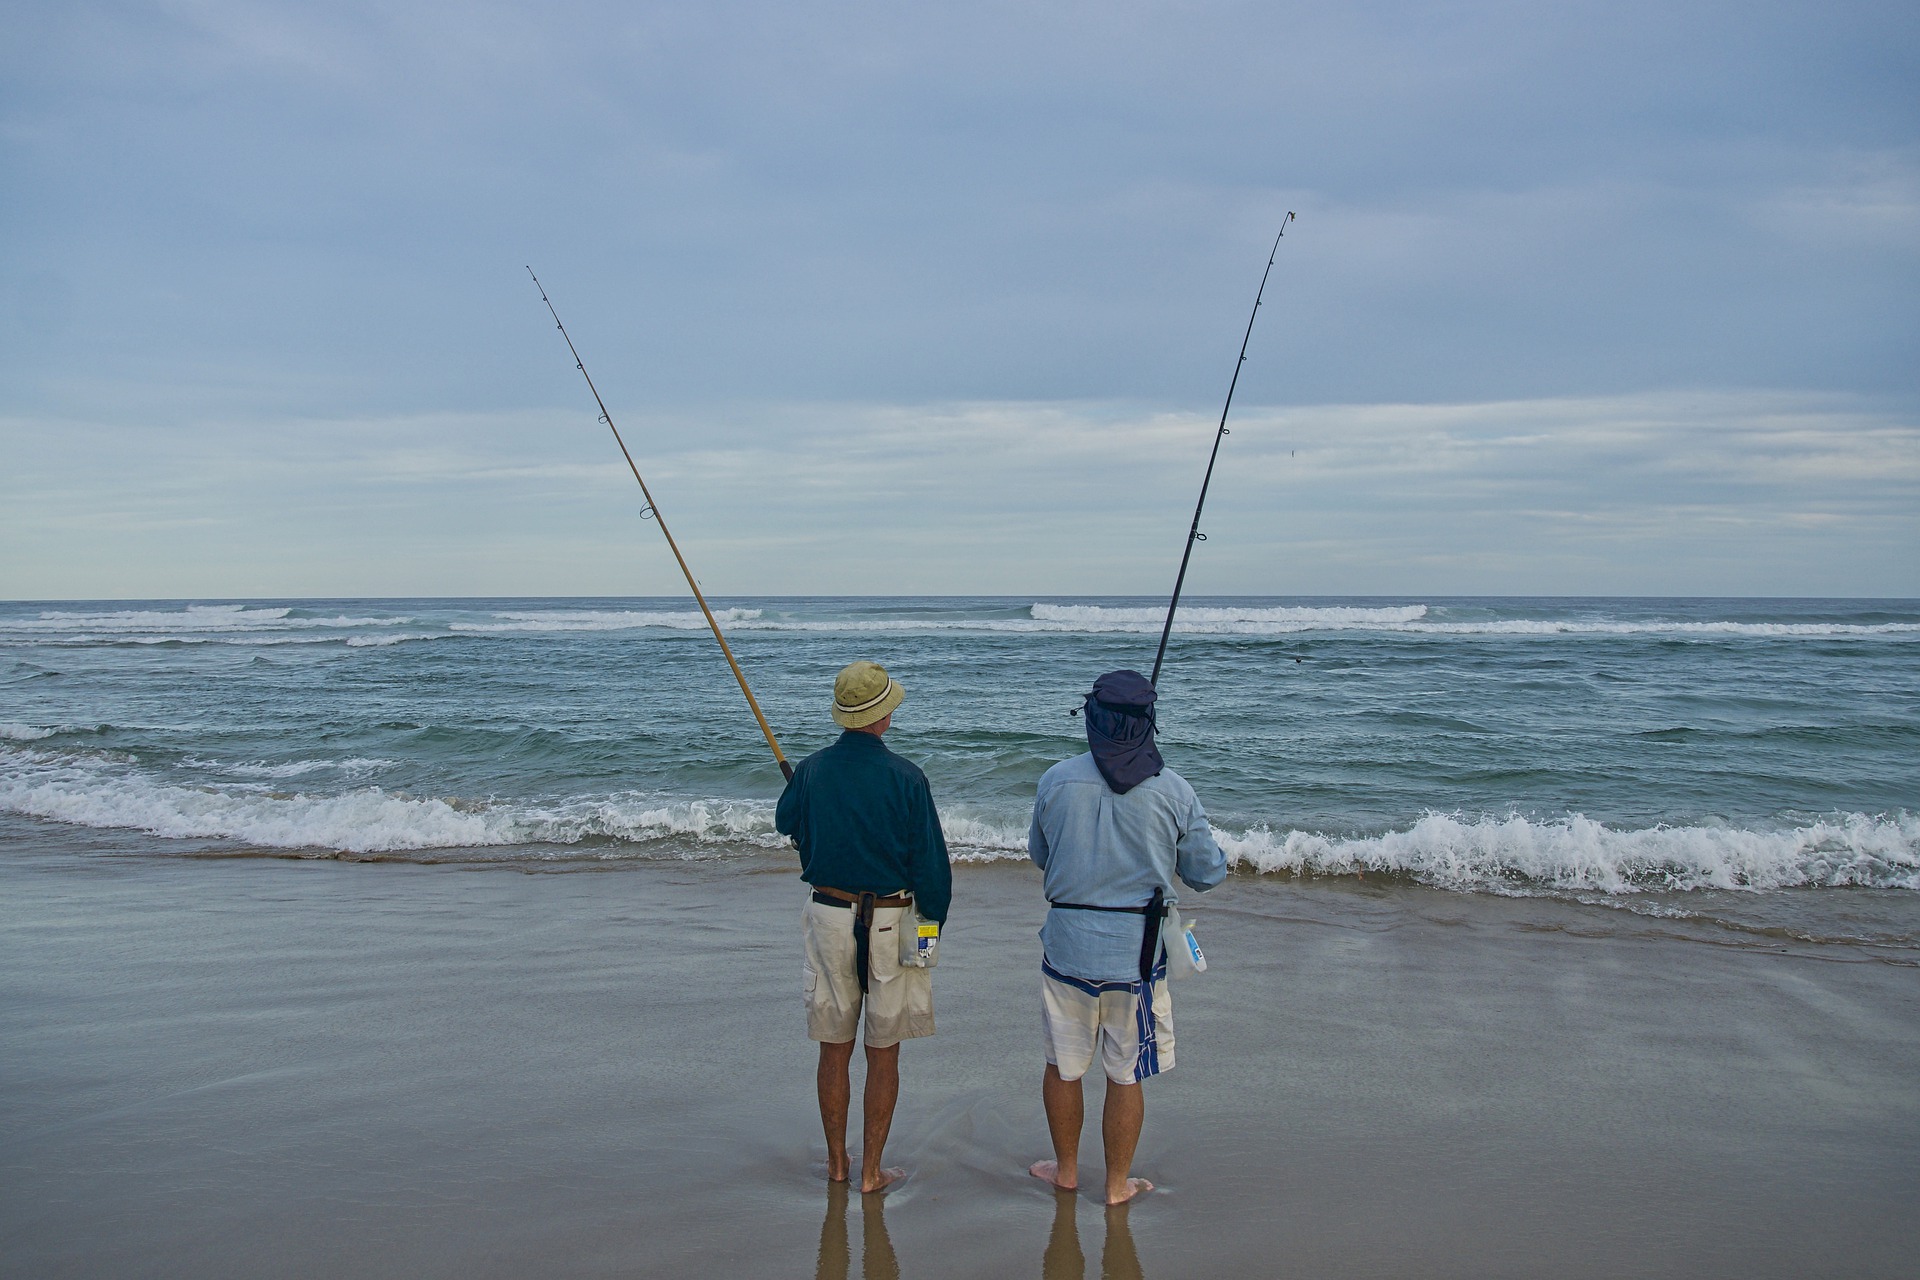 Recreational fishers